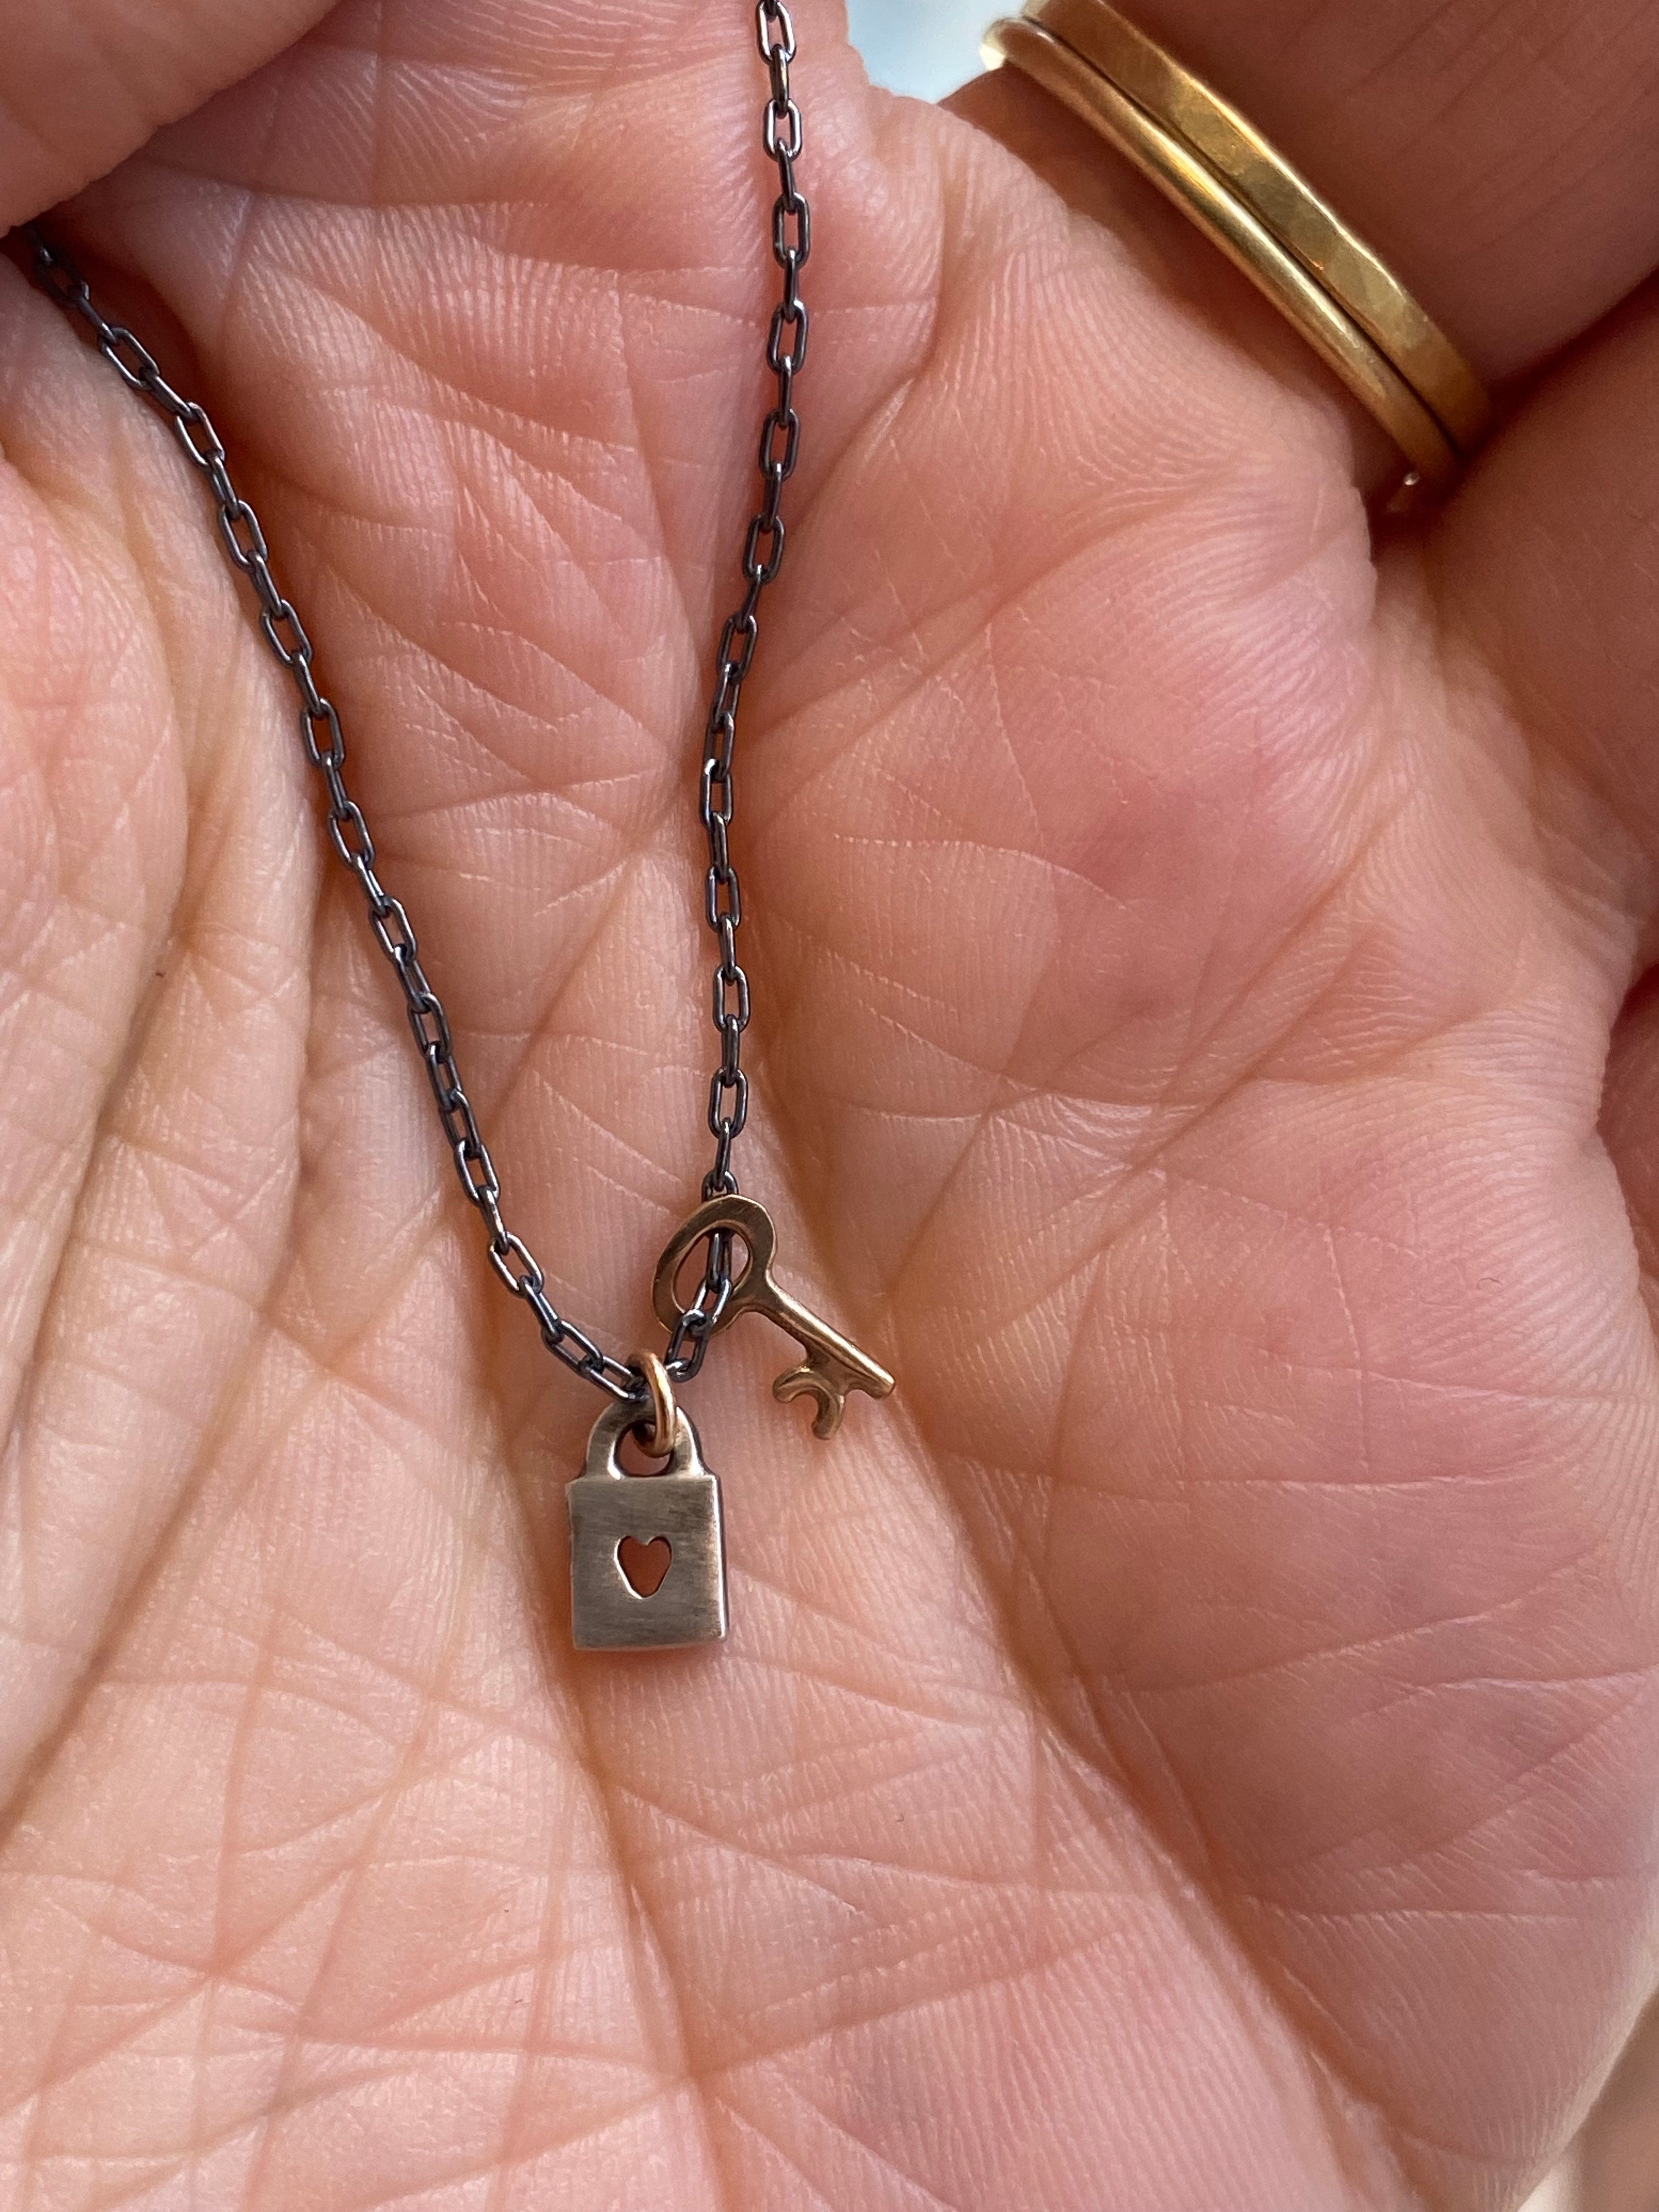 Luana Coonen- Tiny Love Lock Necklace with Key